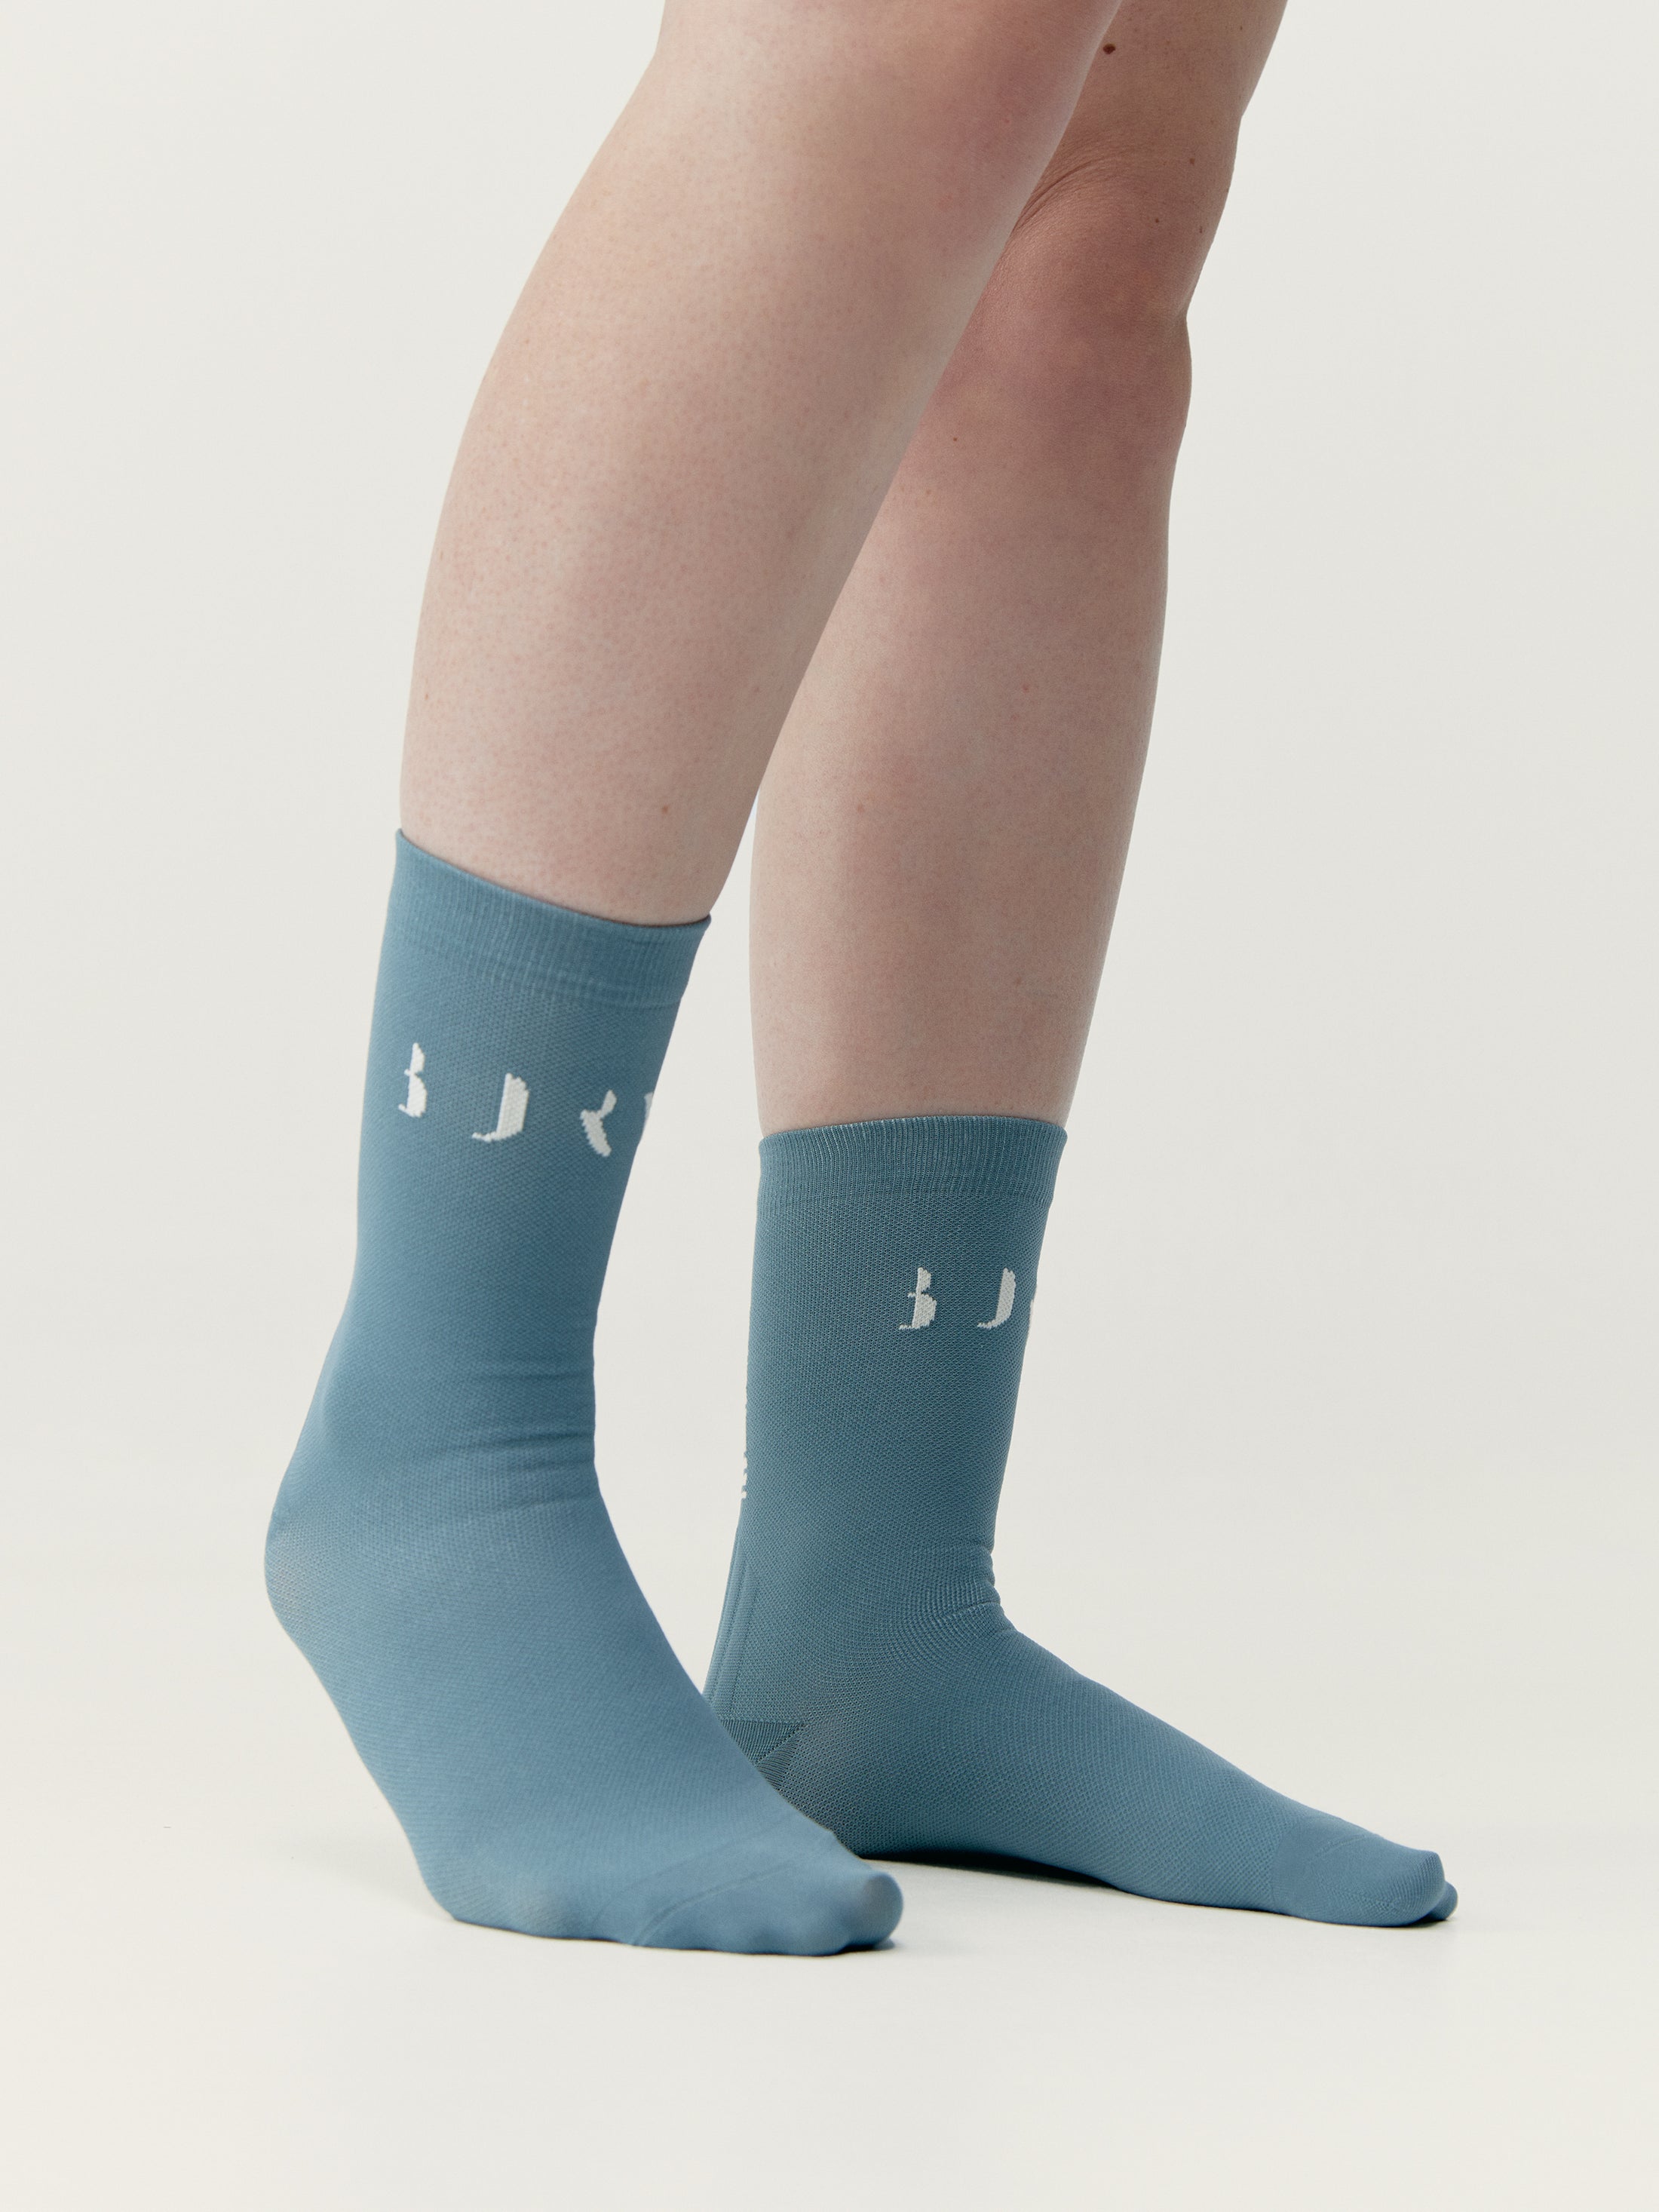 Acari Socks Tin